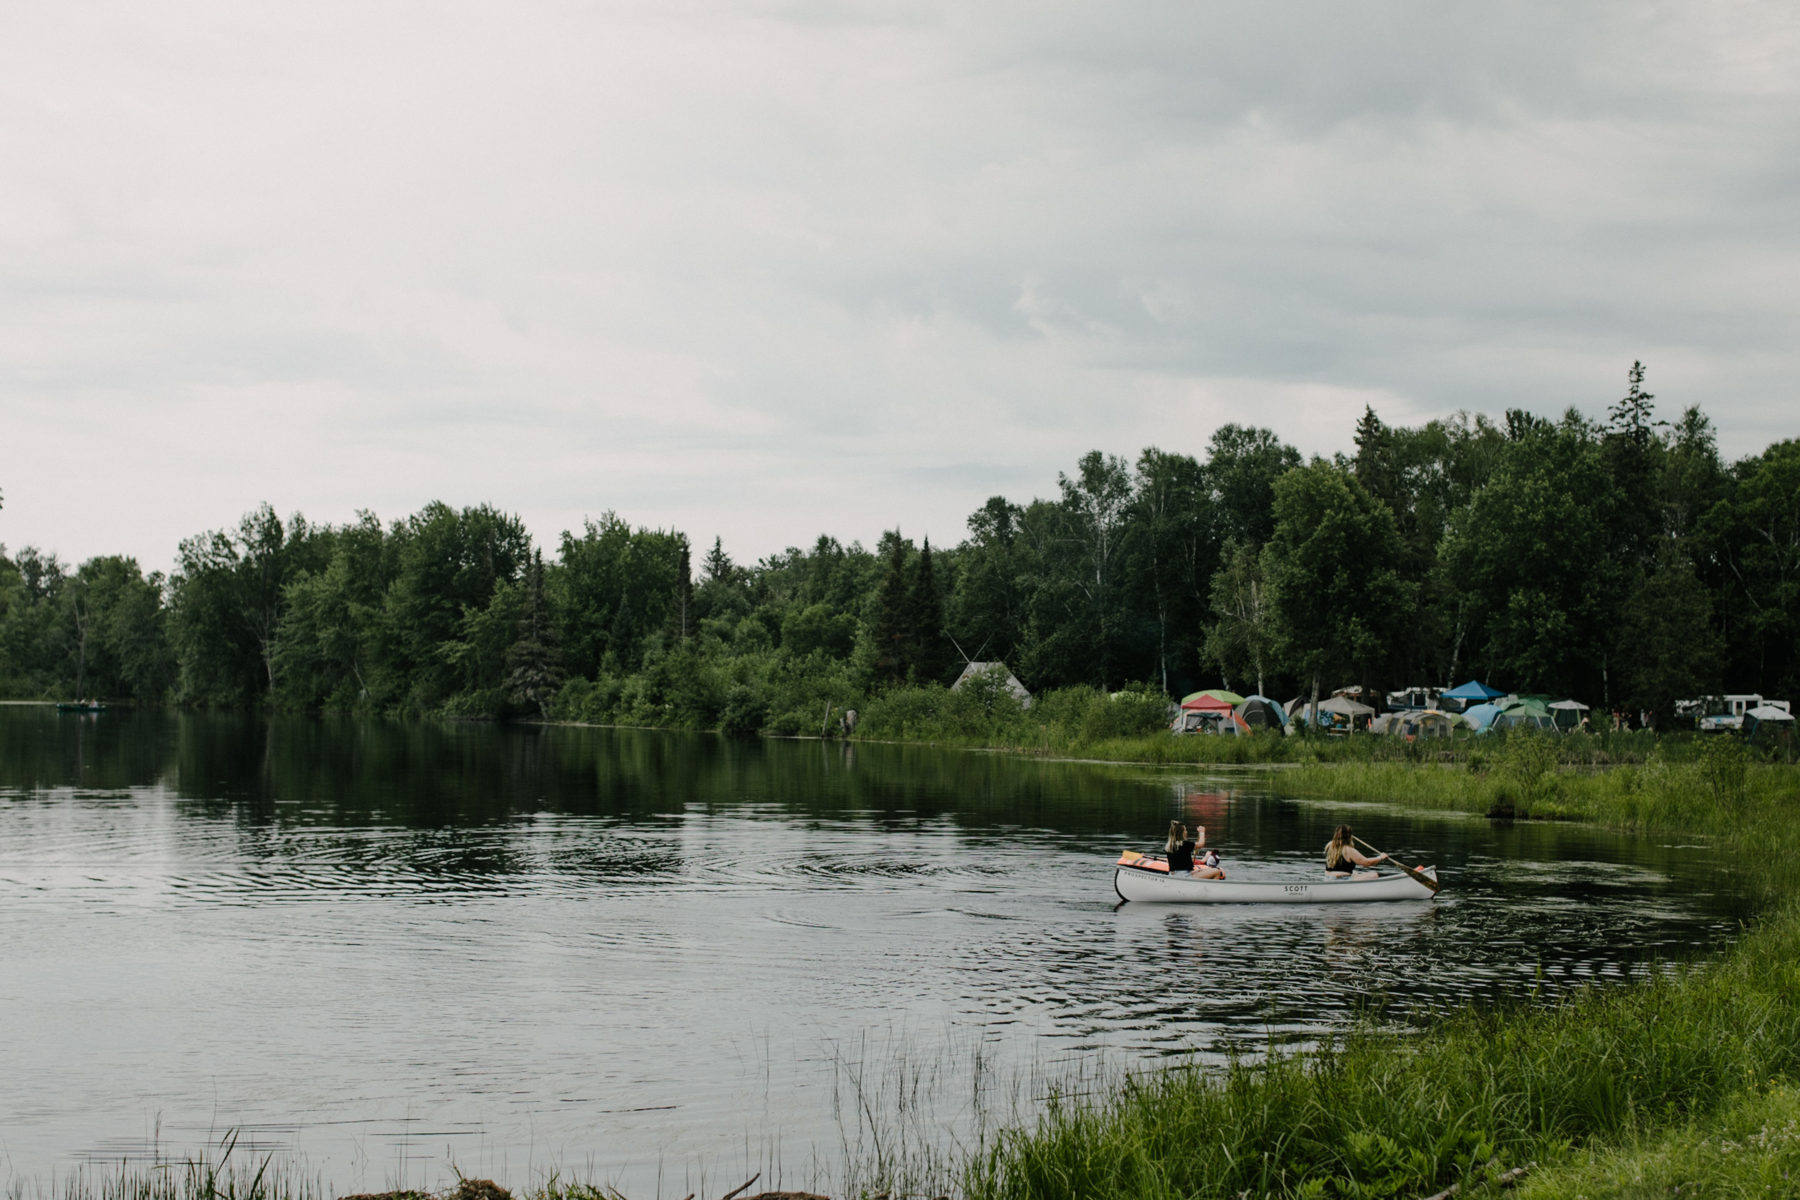 river & sky music festival camping sudbury north bay muskoka toronto photographer 